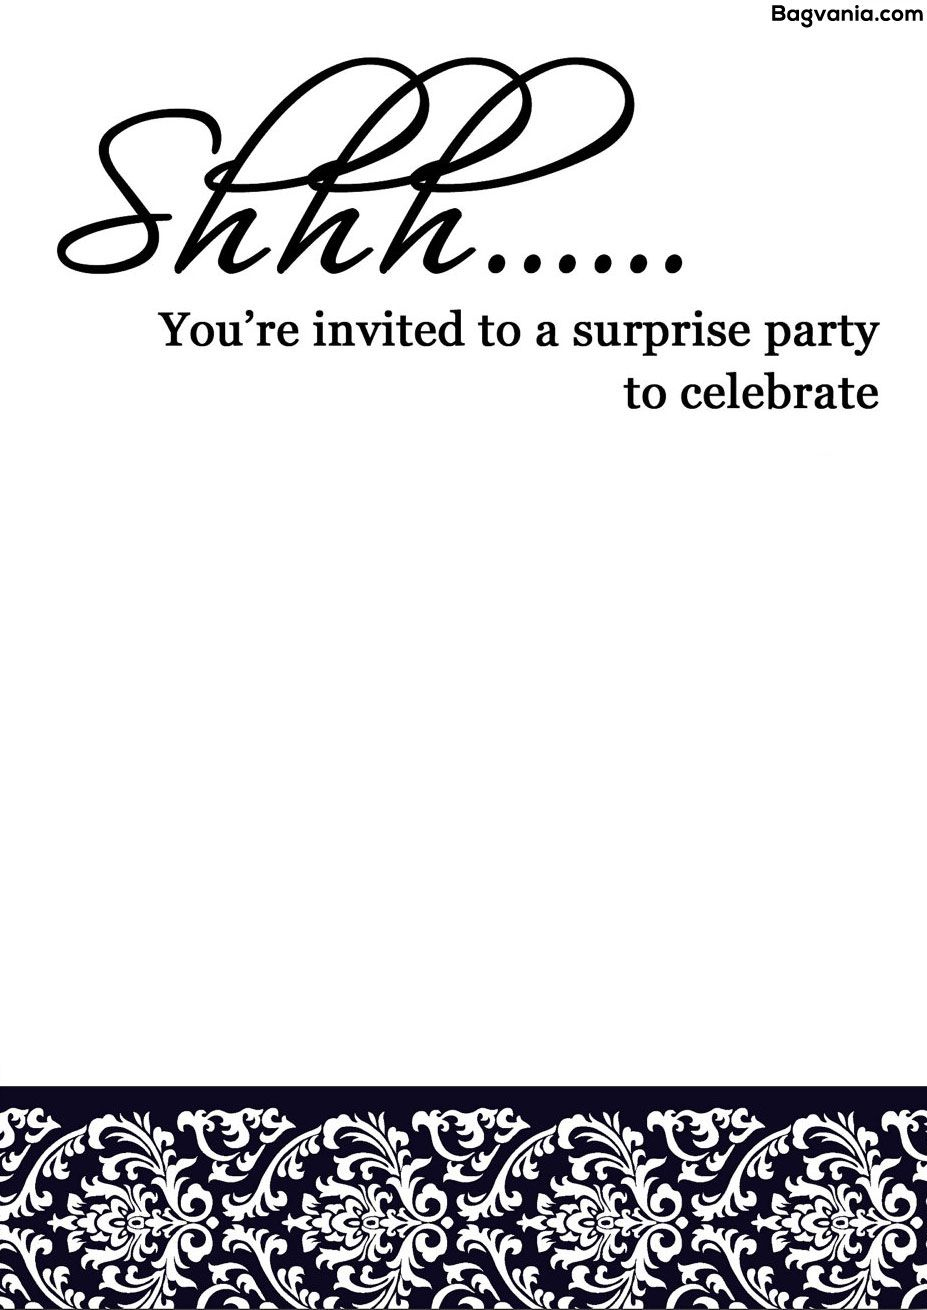 Free Printable Surprise Birthday Invitations – Bagvania Free - Free Printable Golf Stationary